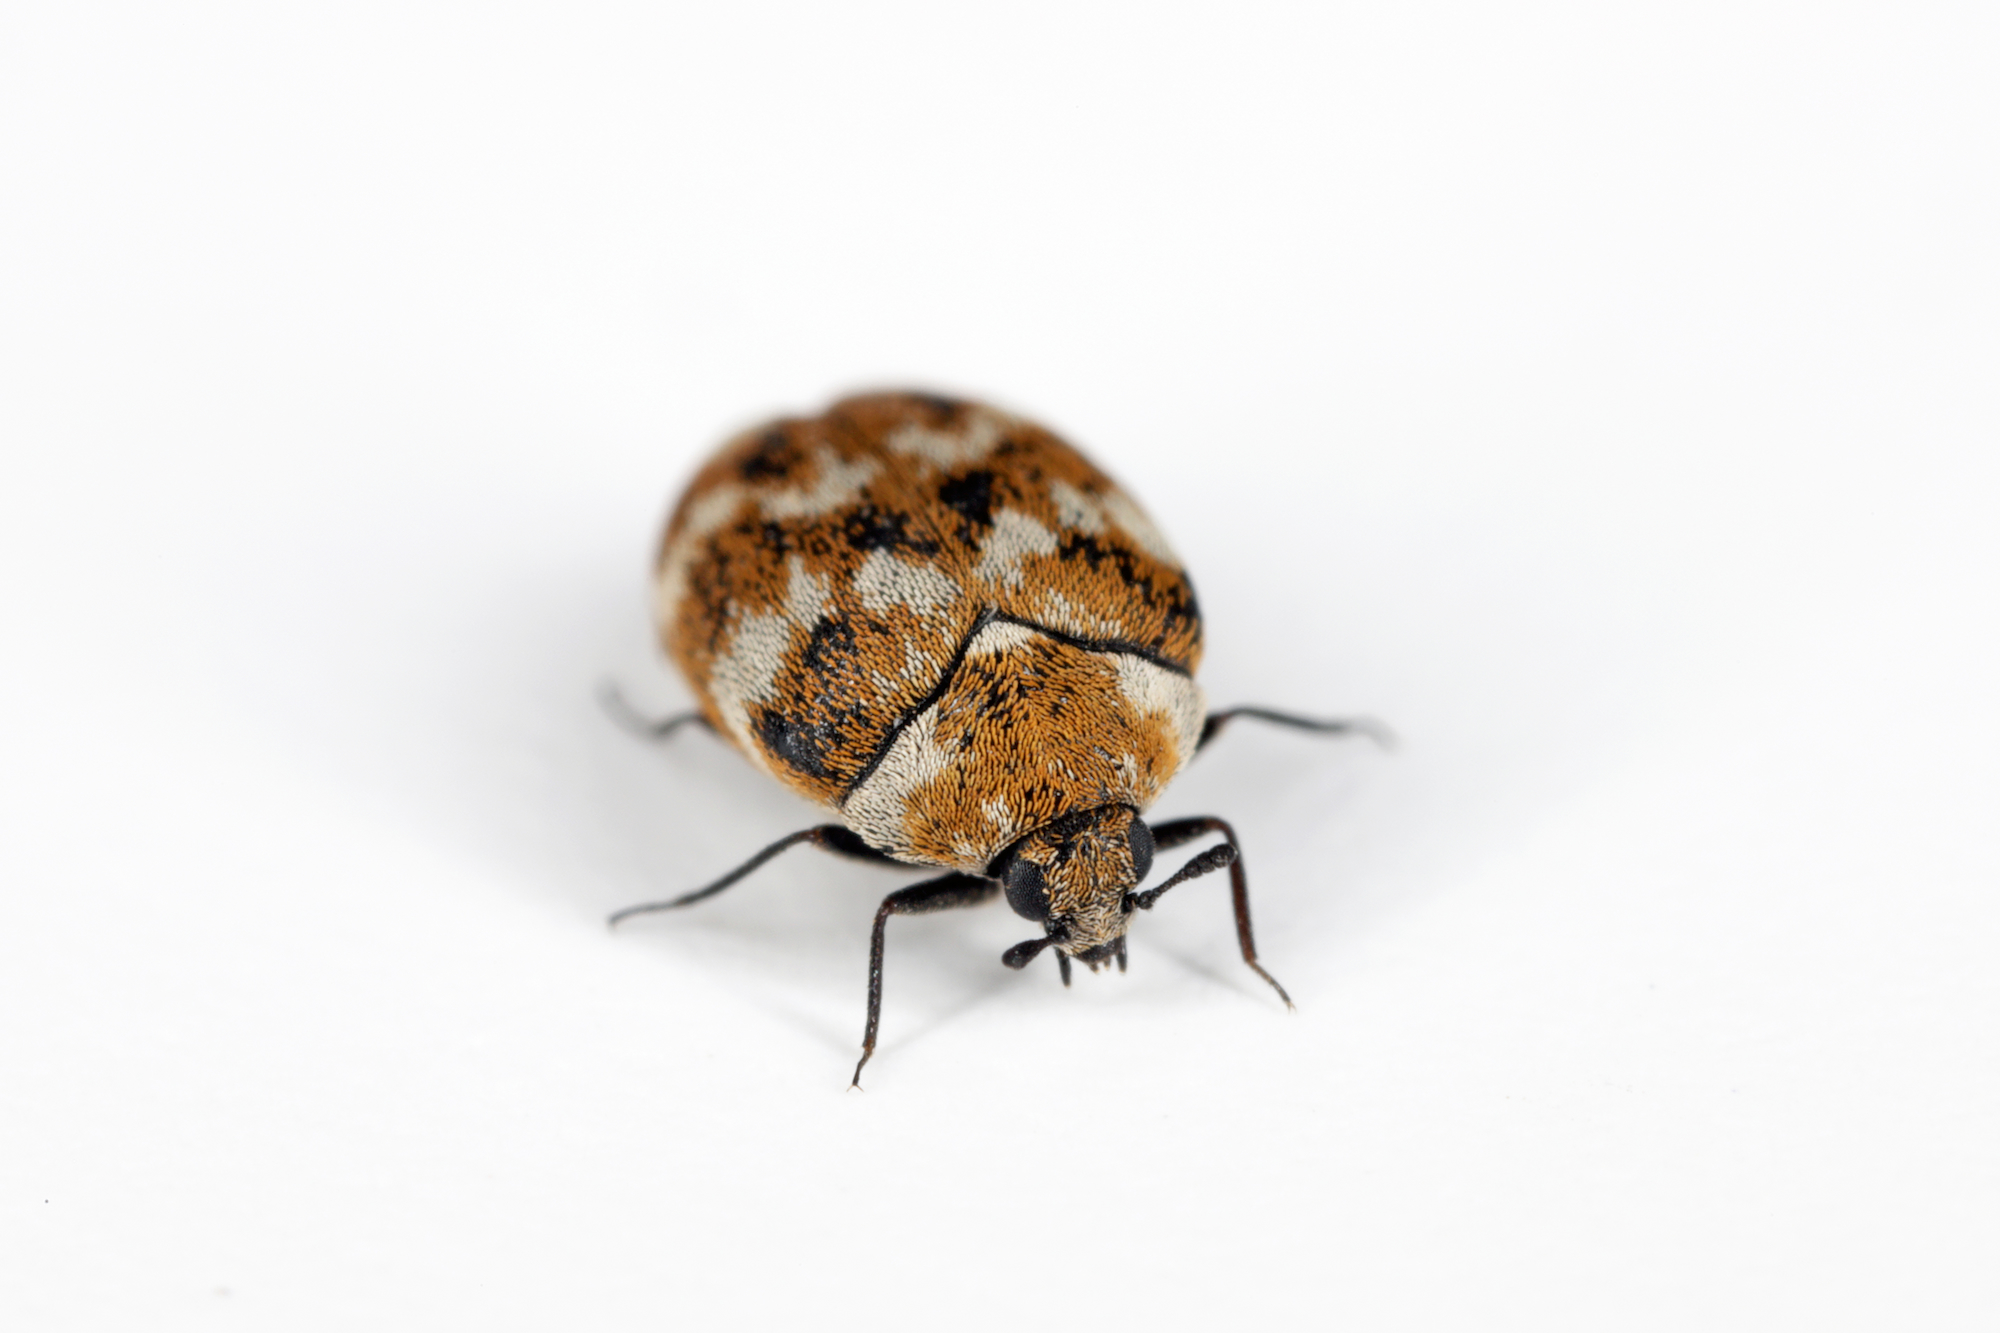 Carpet beetle trap 10-pack - Eliminate carpet beetles